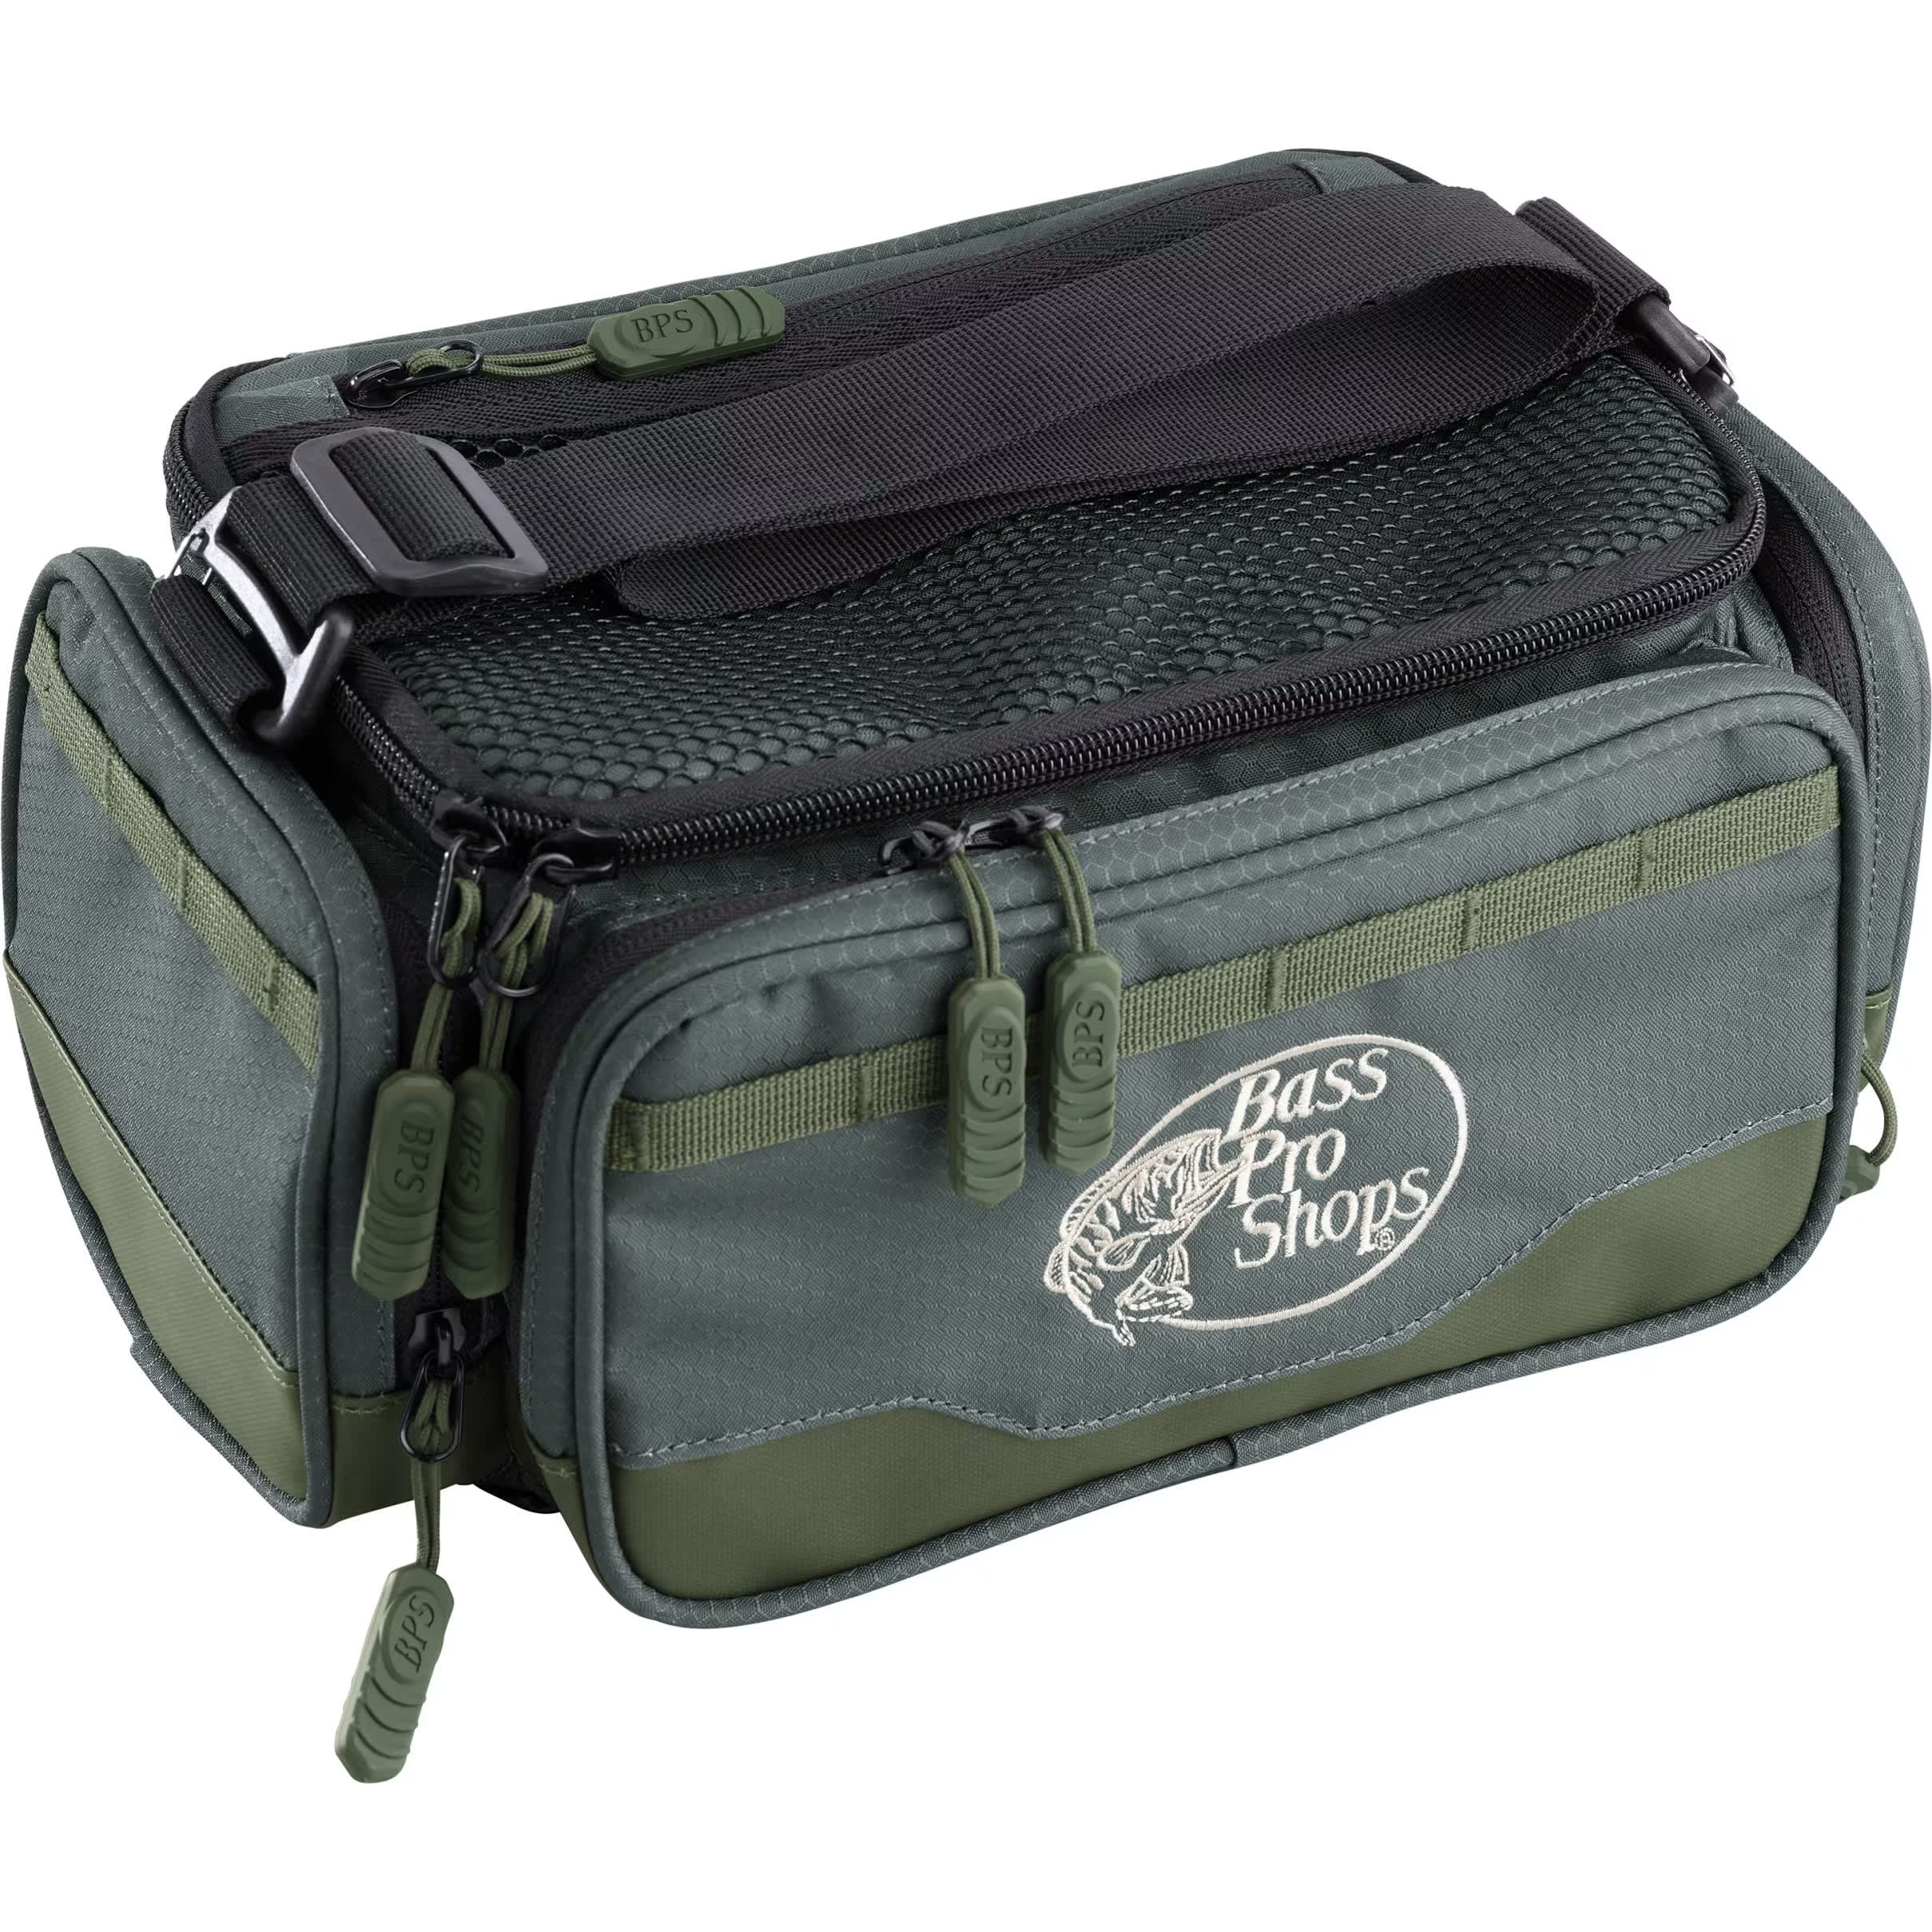 Lunkerhunt™ Tackle Backpack